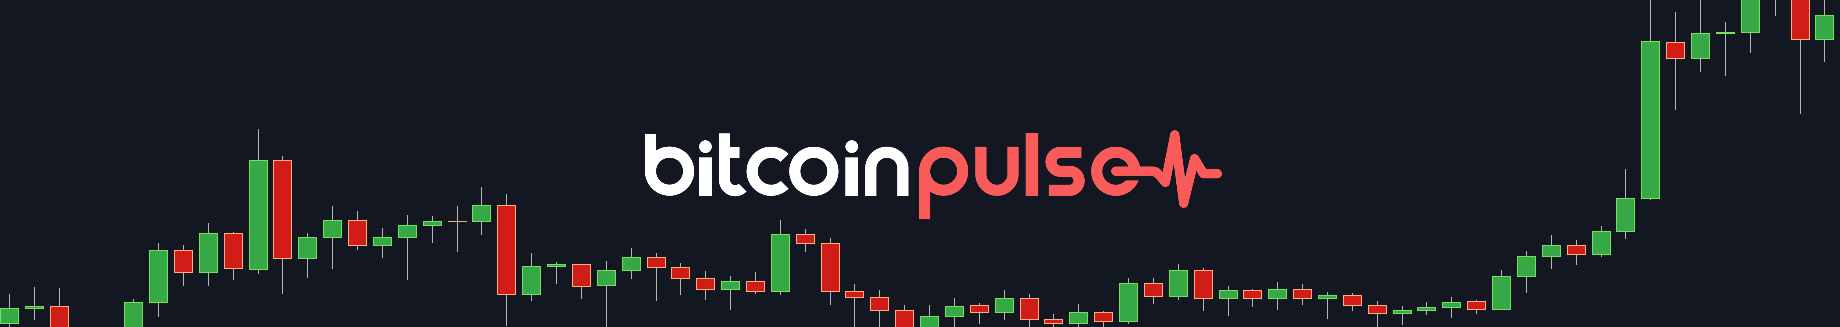 Repeat of 2019 Rally? - Bitcoin Pulse #75